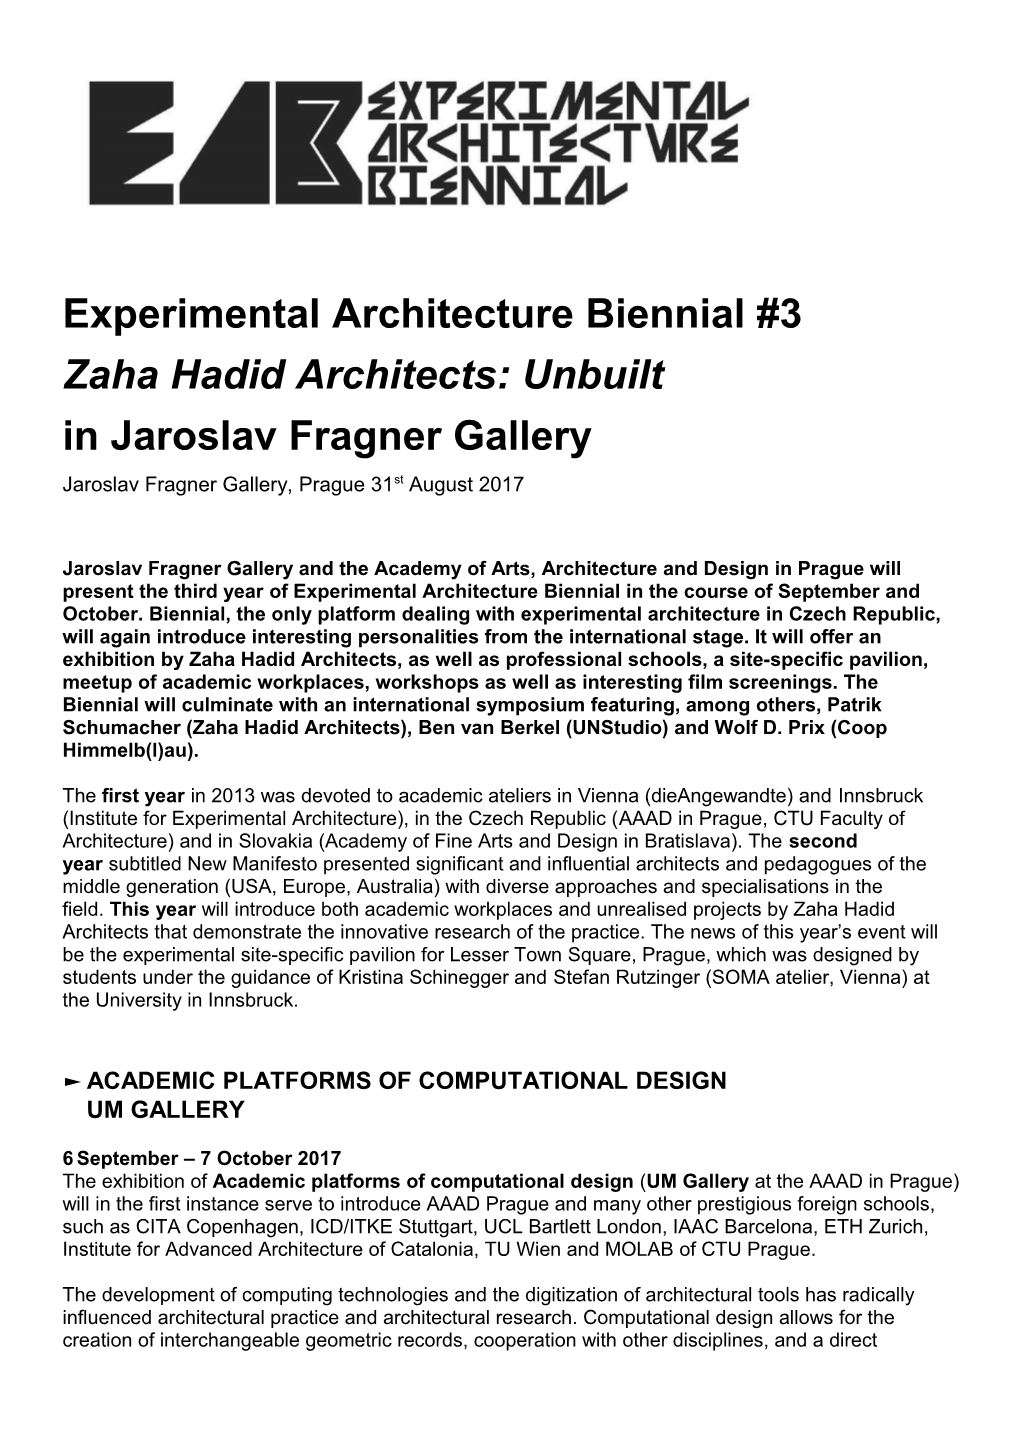 Zaha Hadid Architects: Unbuilt